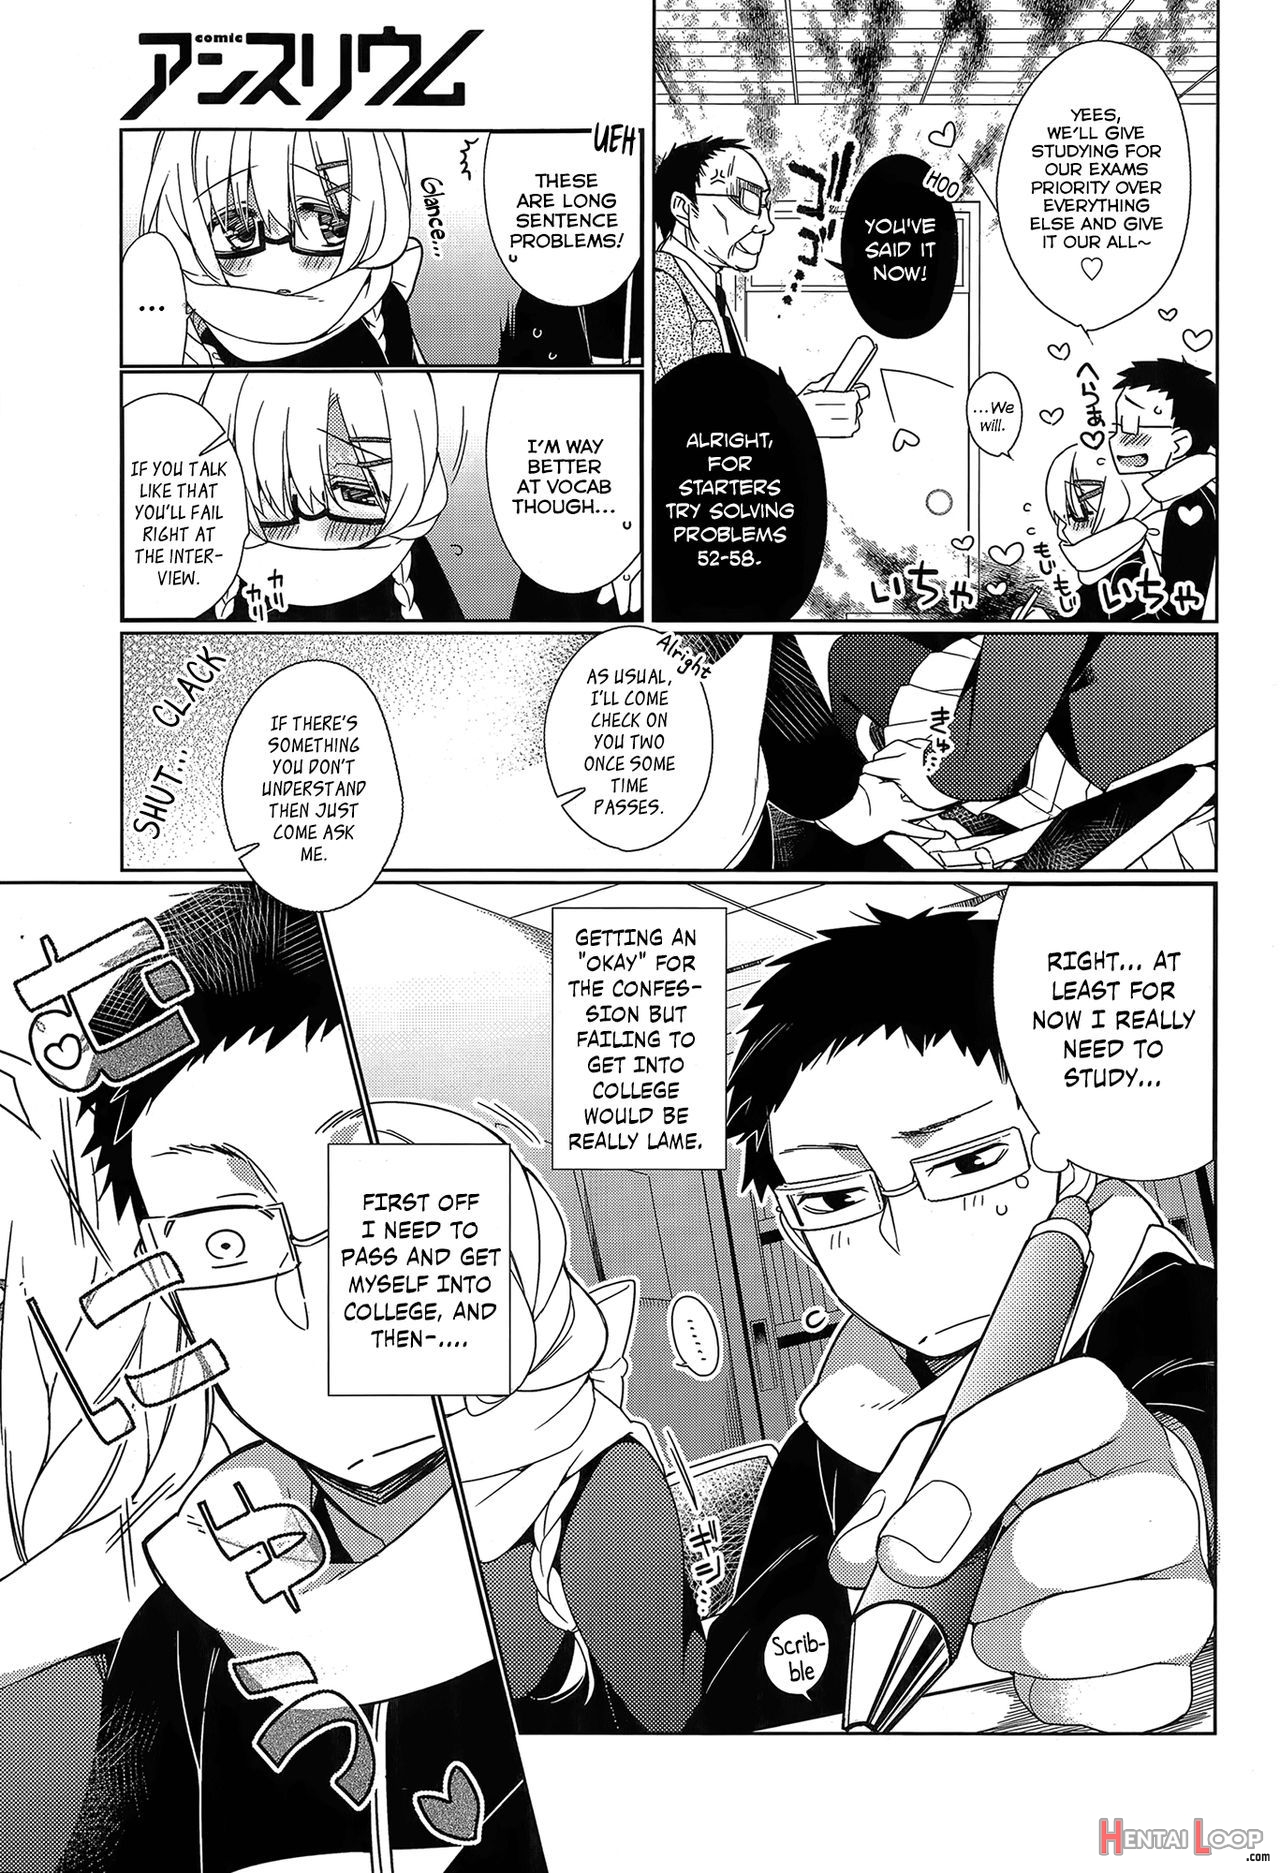 Attaka-san page 7